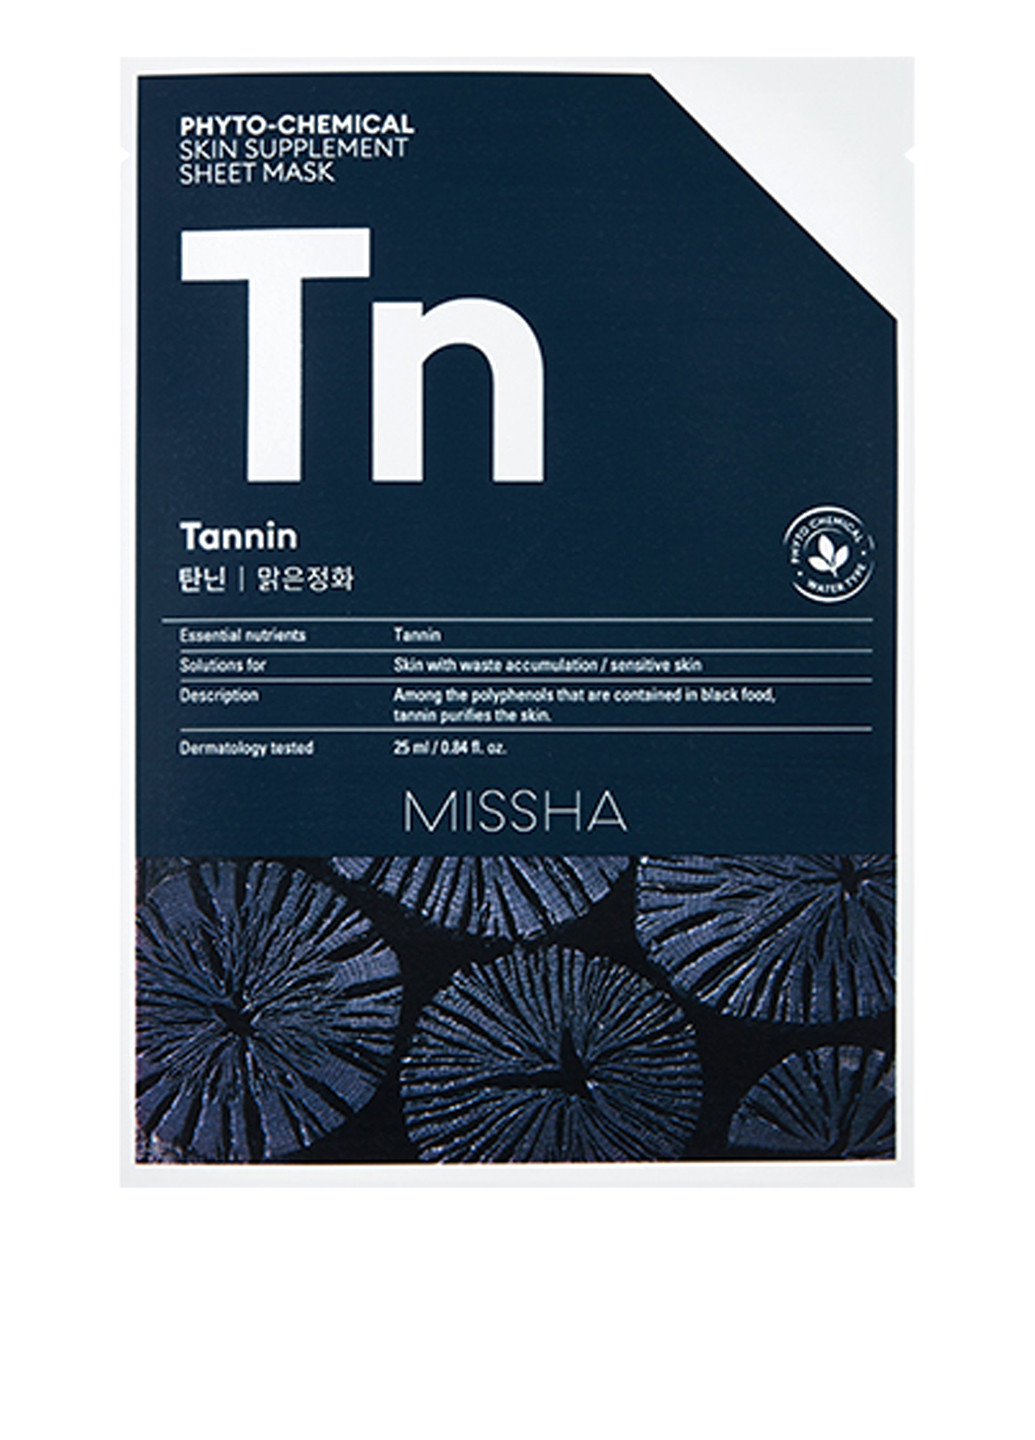 Маска для лица Phytochemical Skin Supplement Sheet Tannin/Purifying, 25 мл MISSHA бесцветная